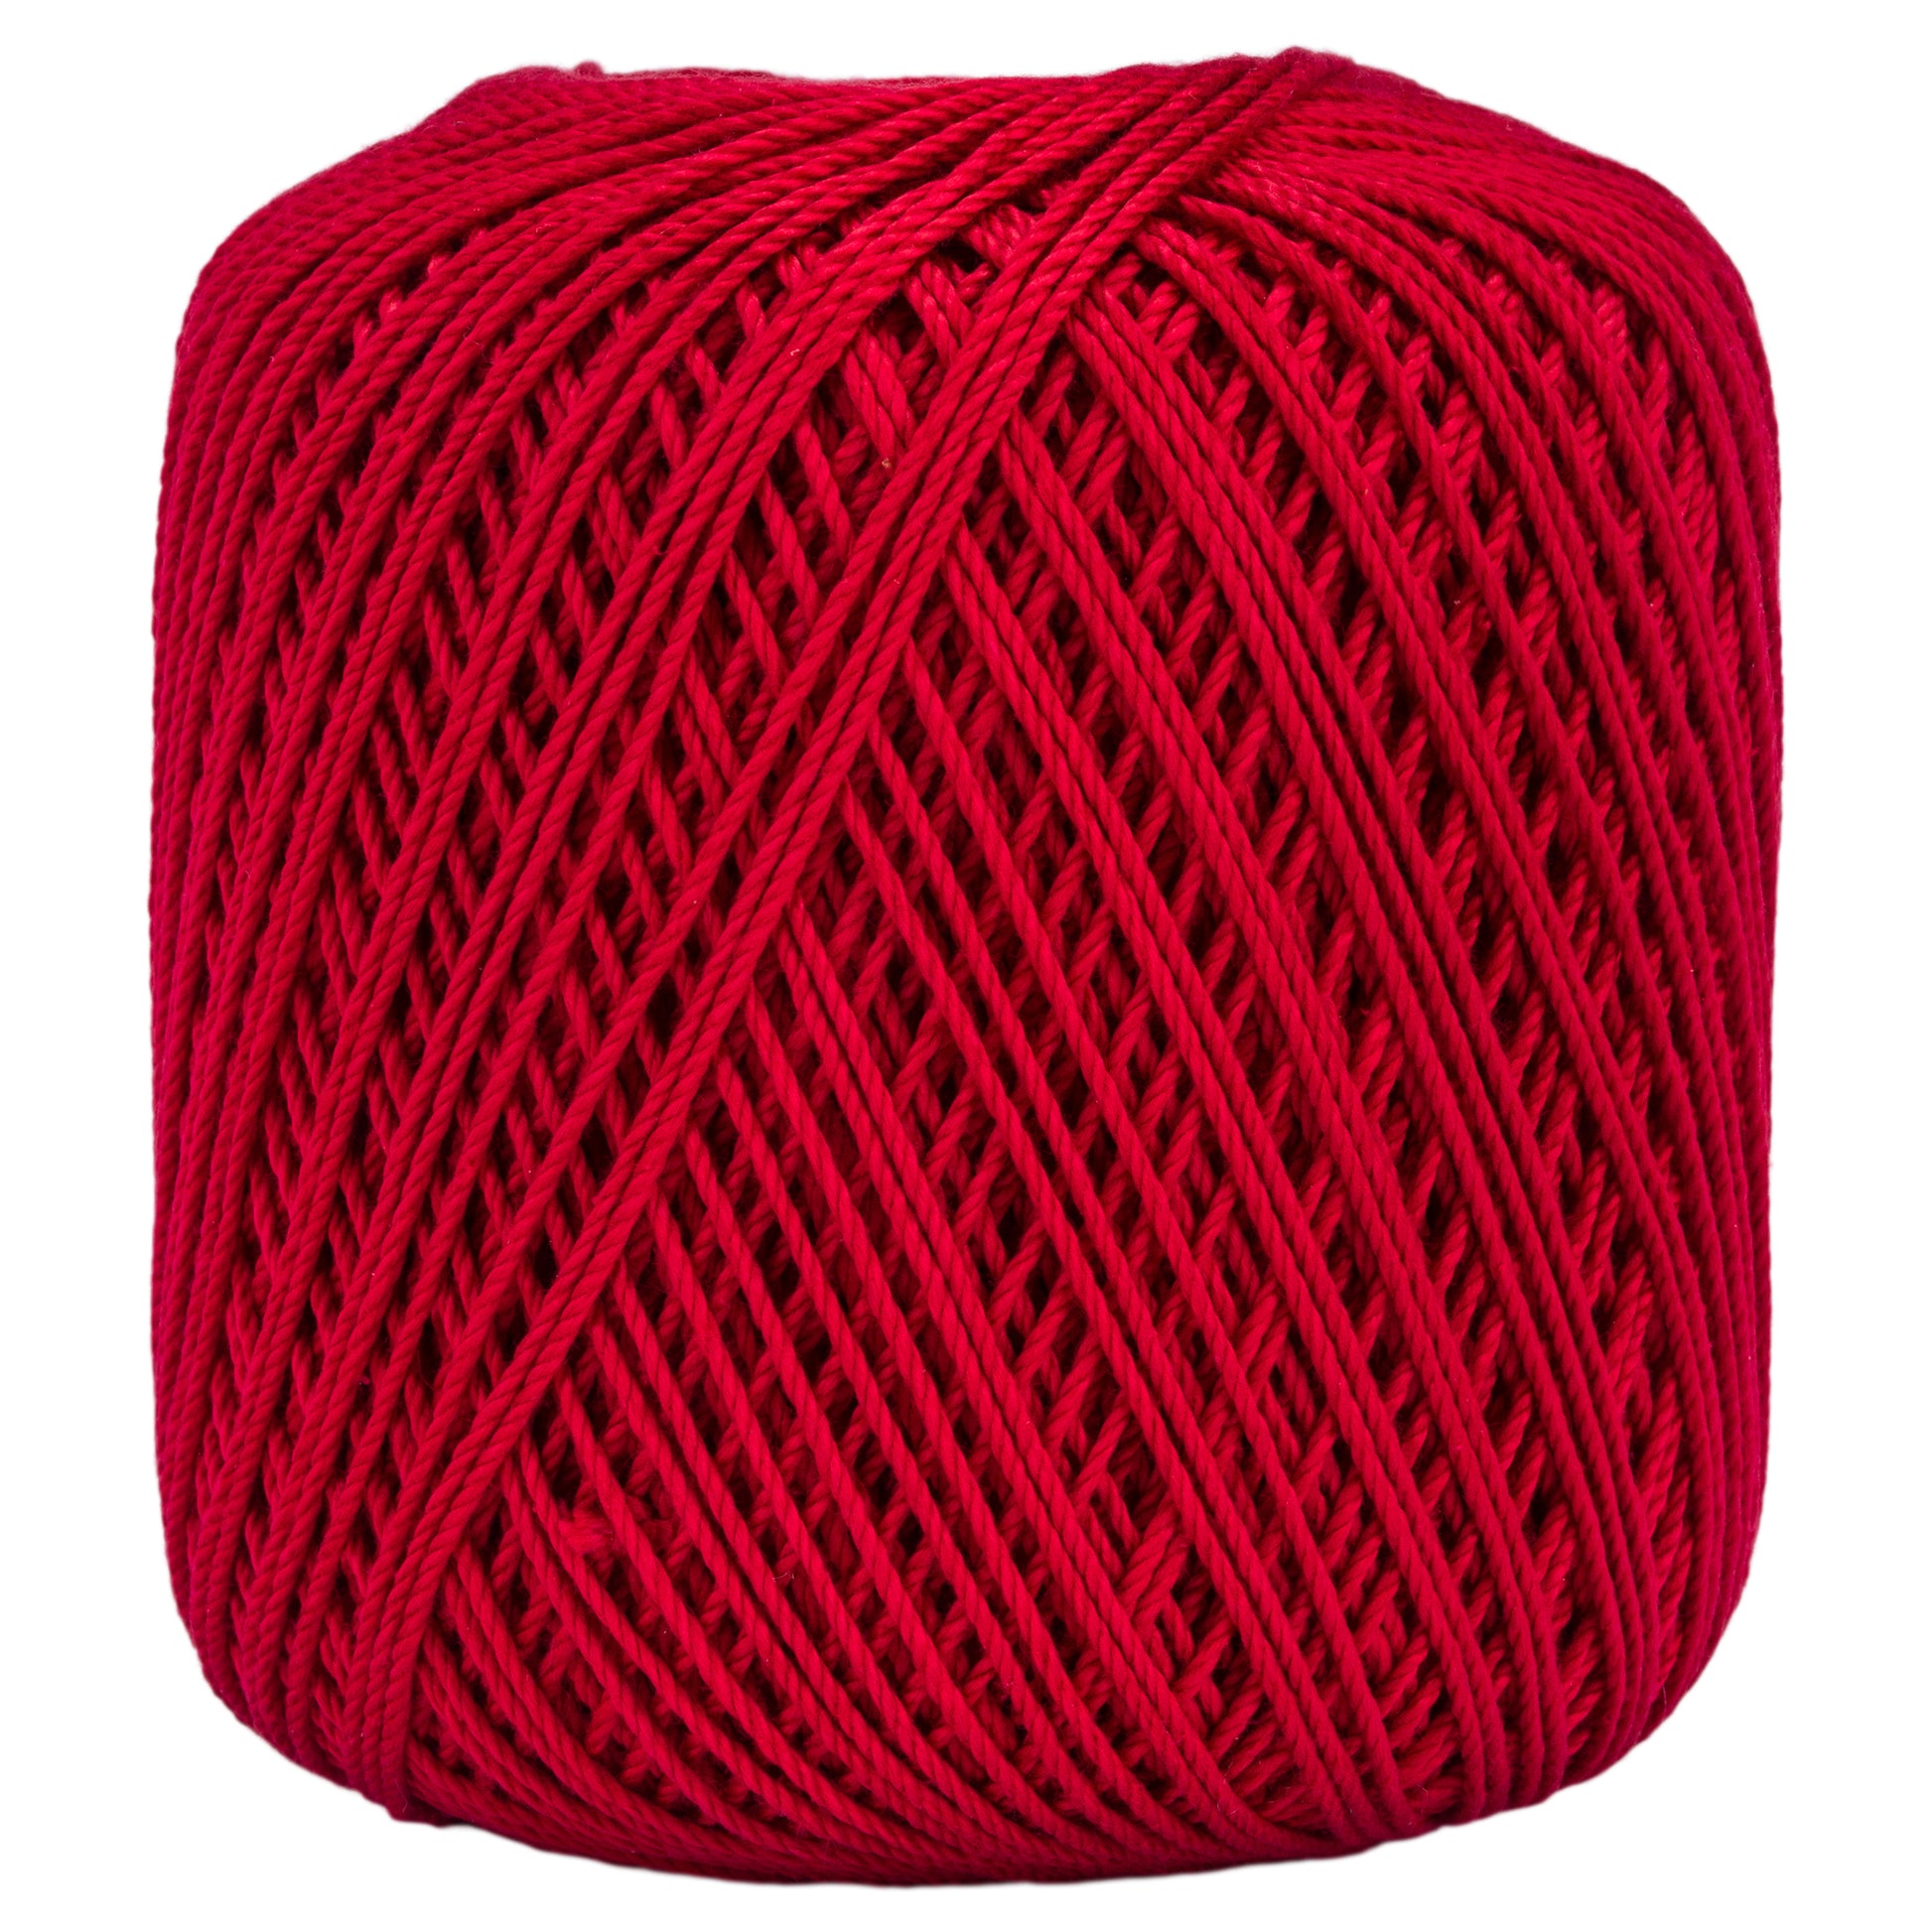  Aunt Lydia's Crochet Thread - Size 3 - (2-Pack) Plum